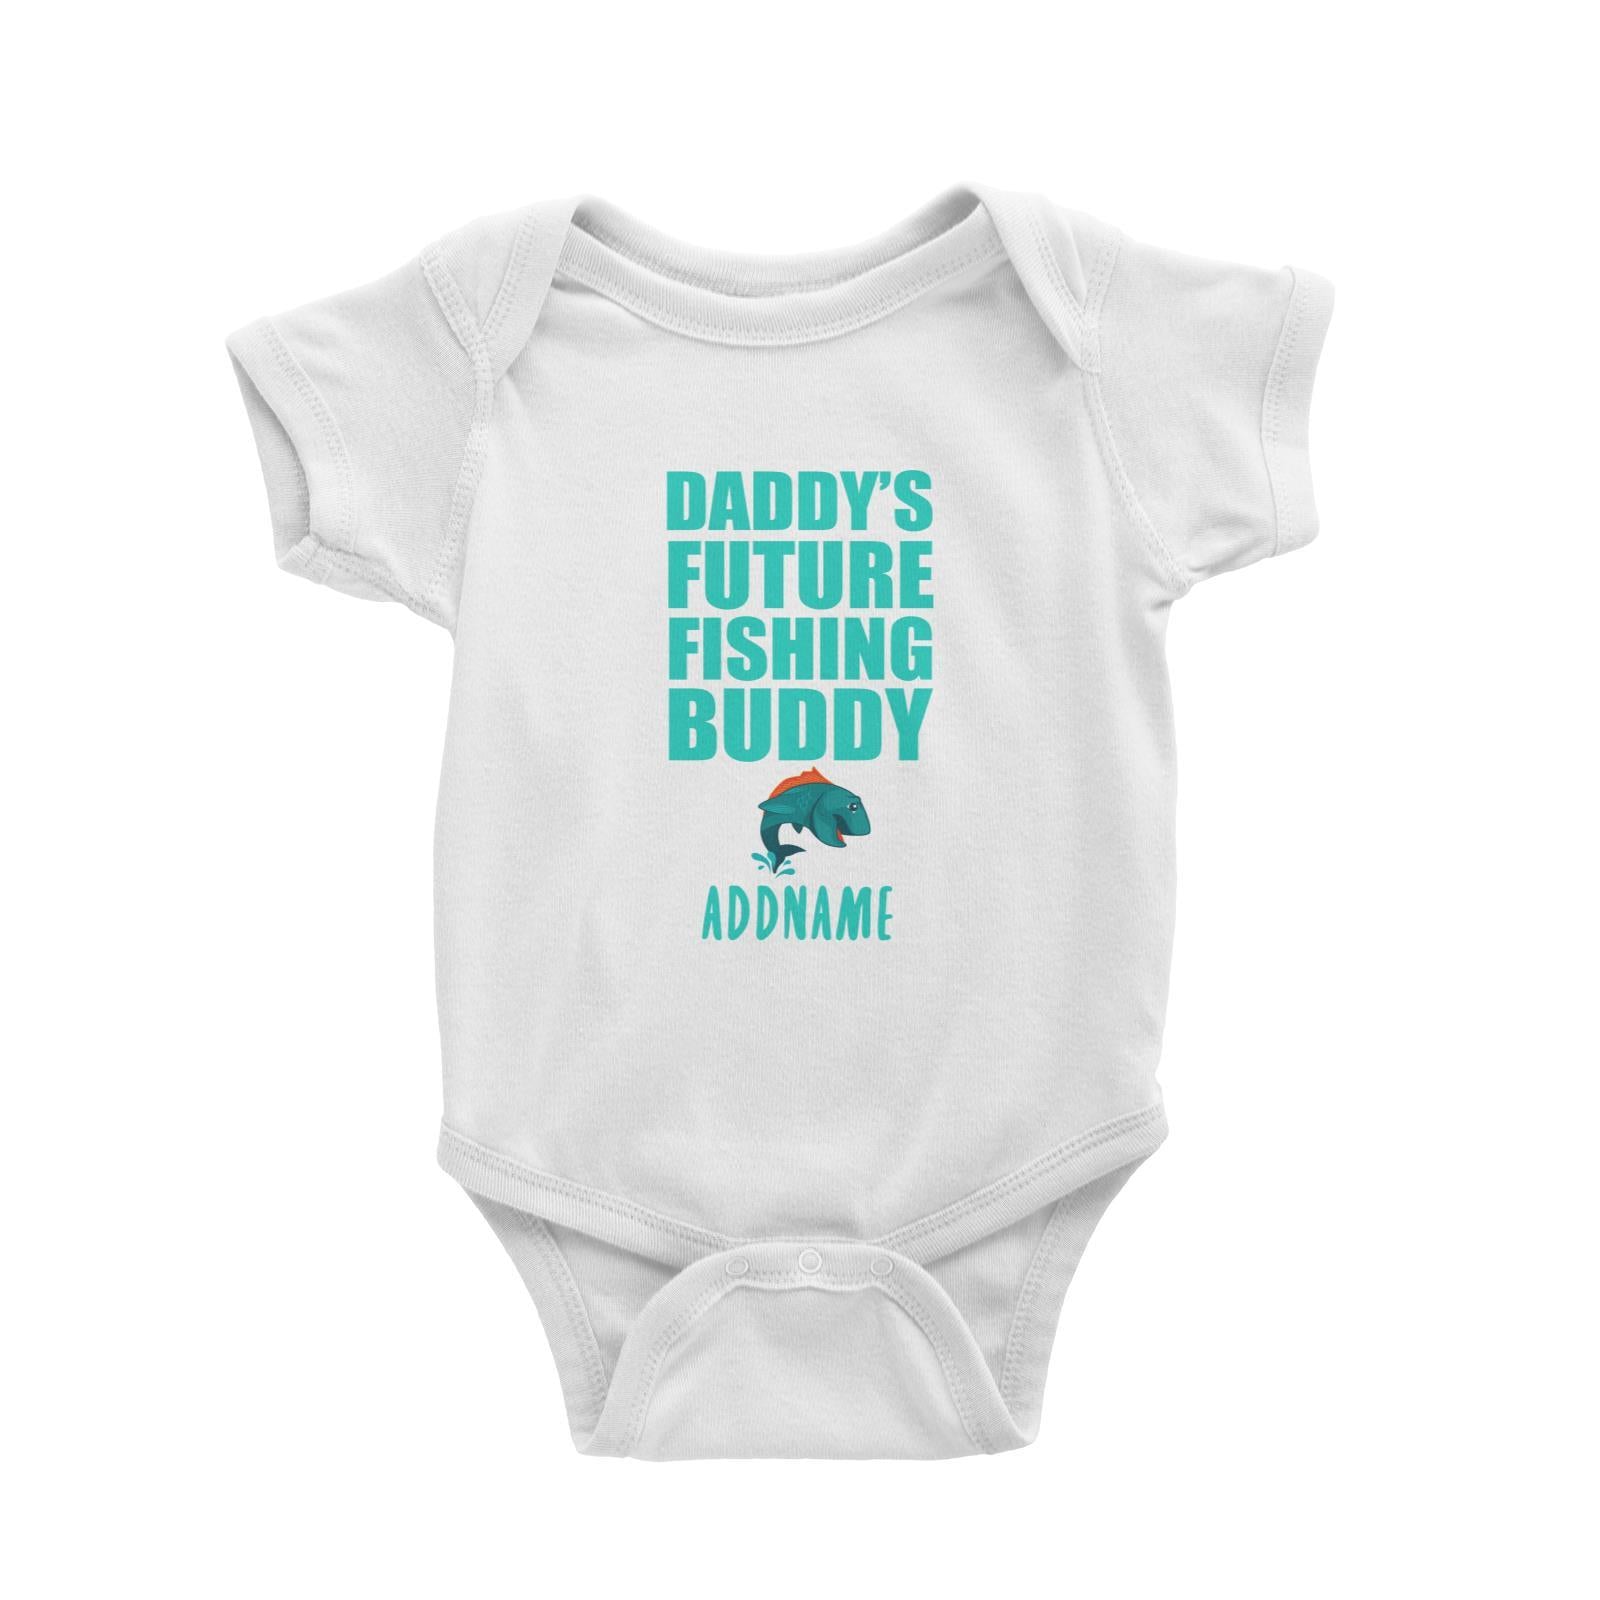 Daddy's Future Fishing Buddy Addname Baby Romper Personalizable Designs Basic Newborn